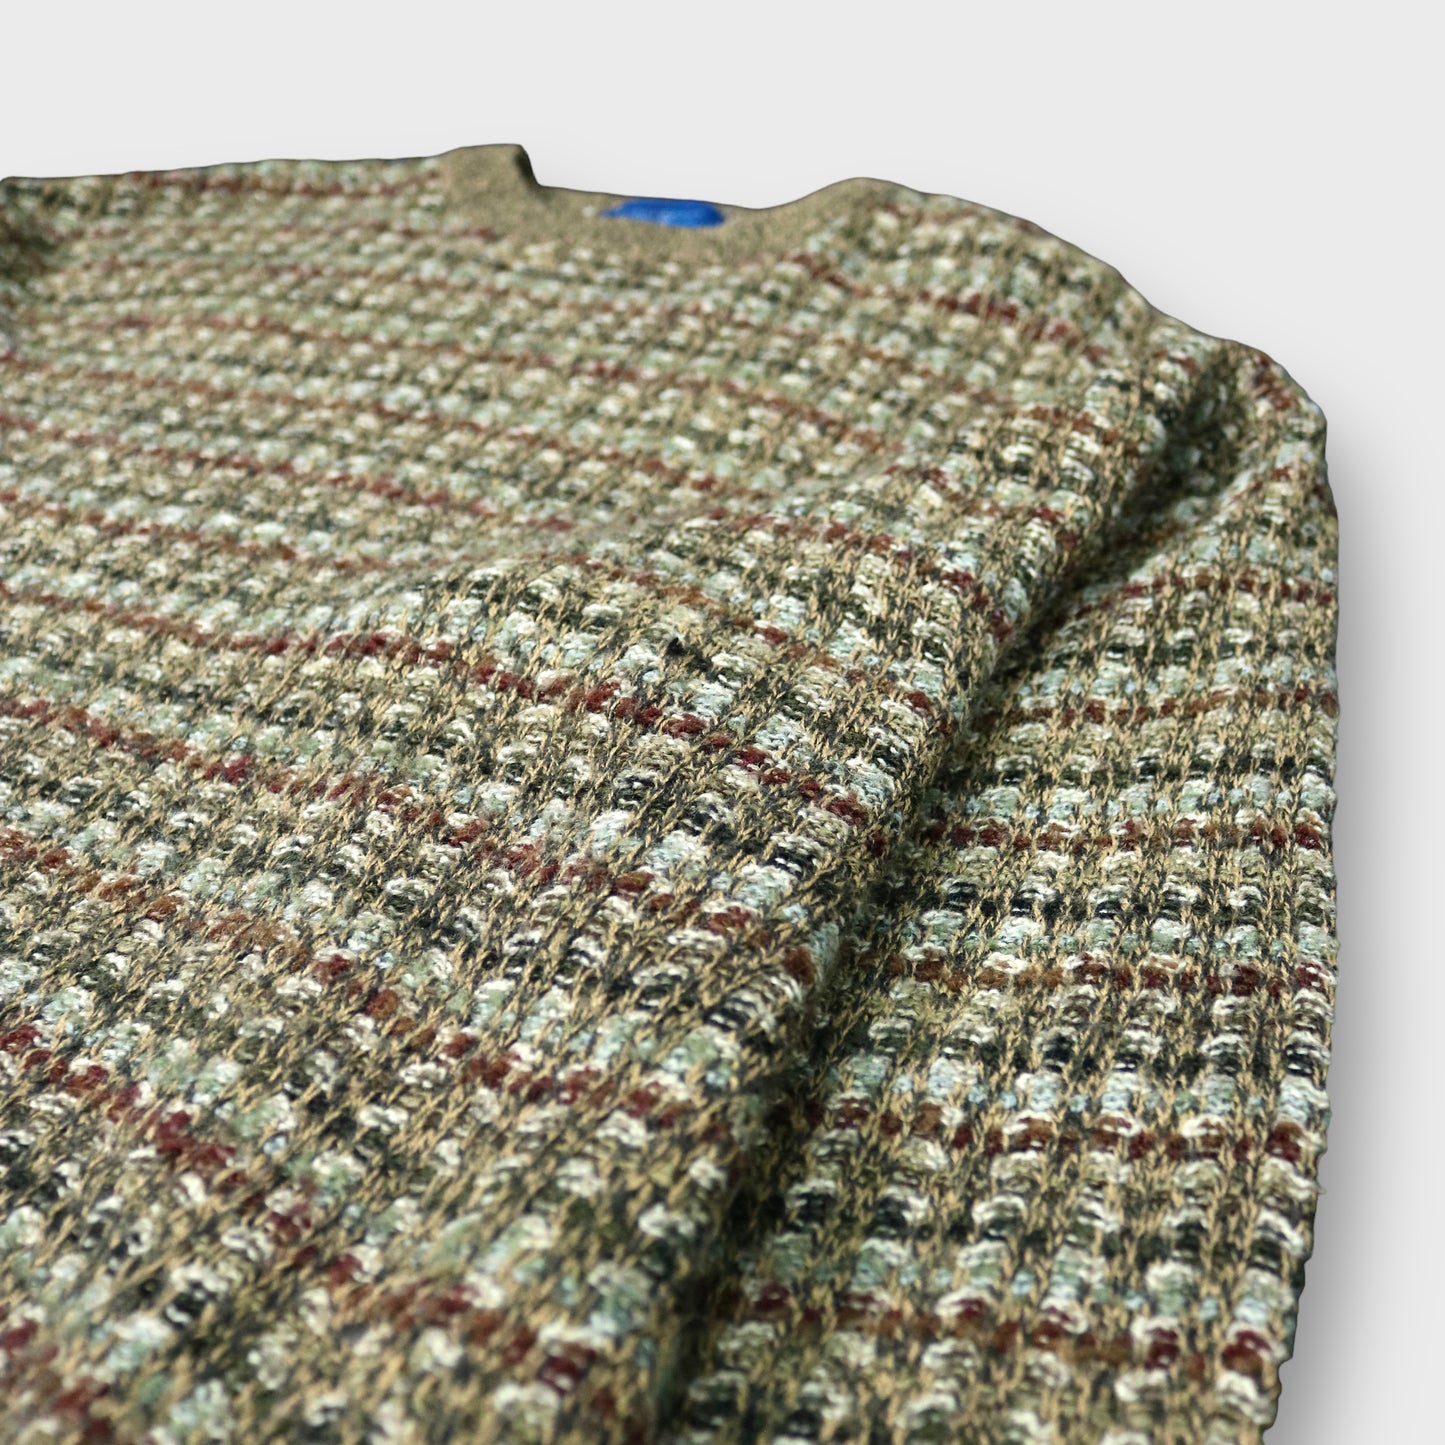 80-90's "TOWN CRAFT" Multi pattern knit sweater